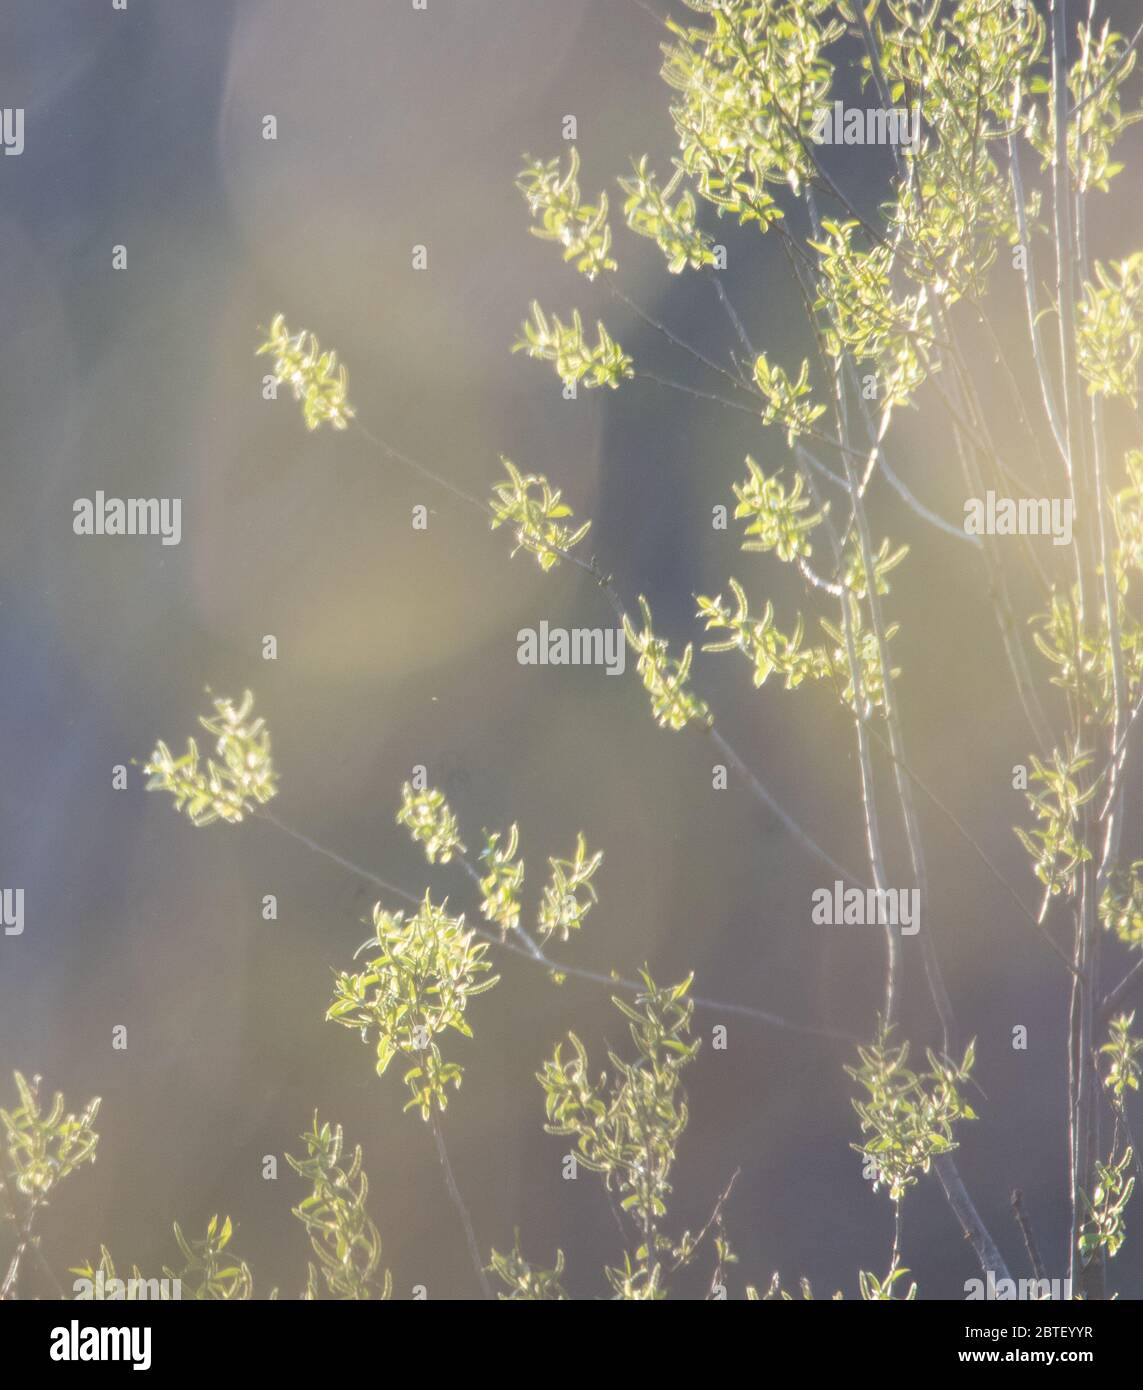 Frühling Natur Hintergrund der Sumpfvegetation in Morgensonne Stockfoto